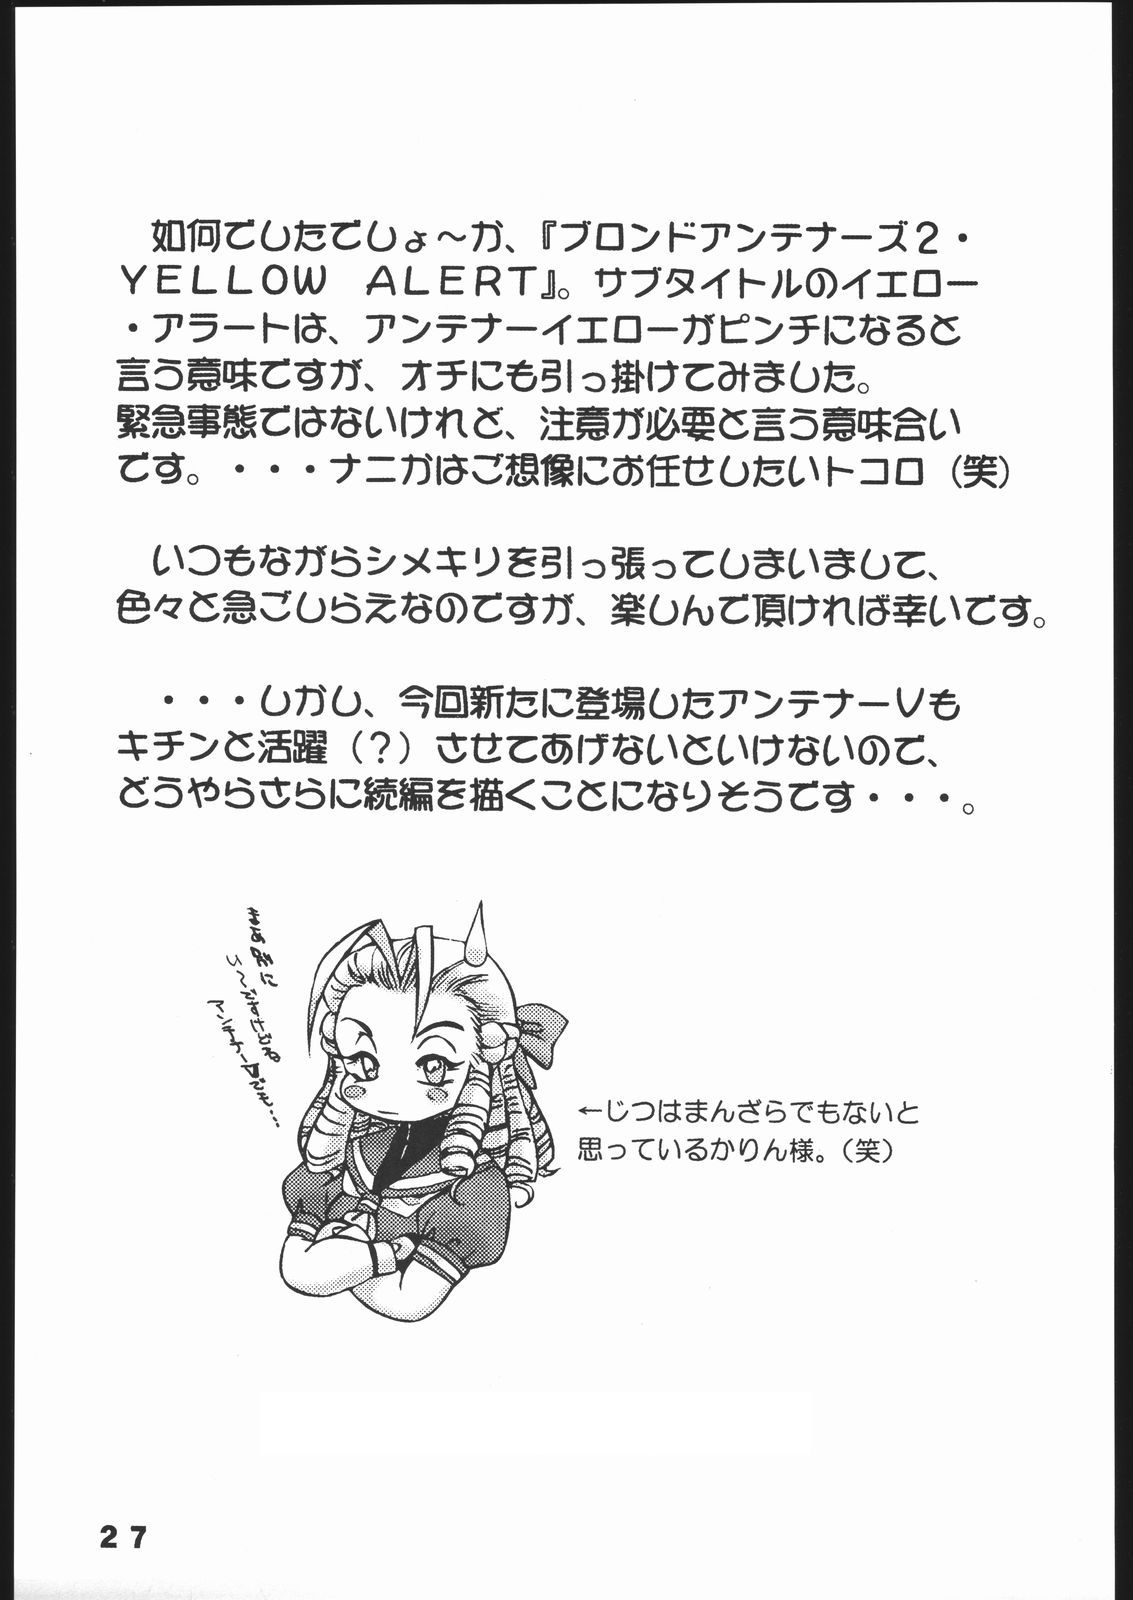 [Street Fighter] Nousatsu Sentai Blonde Antennas 2 - Yellow Alert(Sunset Dreamer) [SUNSET DREAMER] 悩殺戦隊ブロンドアンテナーズ・2 YELLOW ALERT